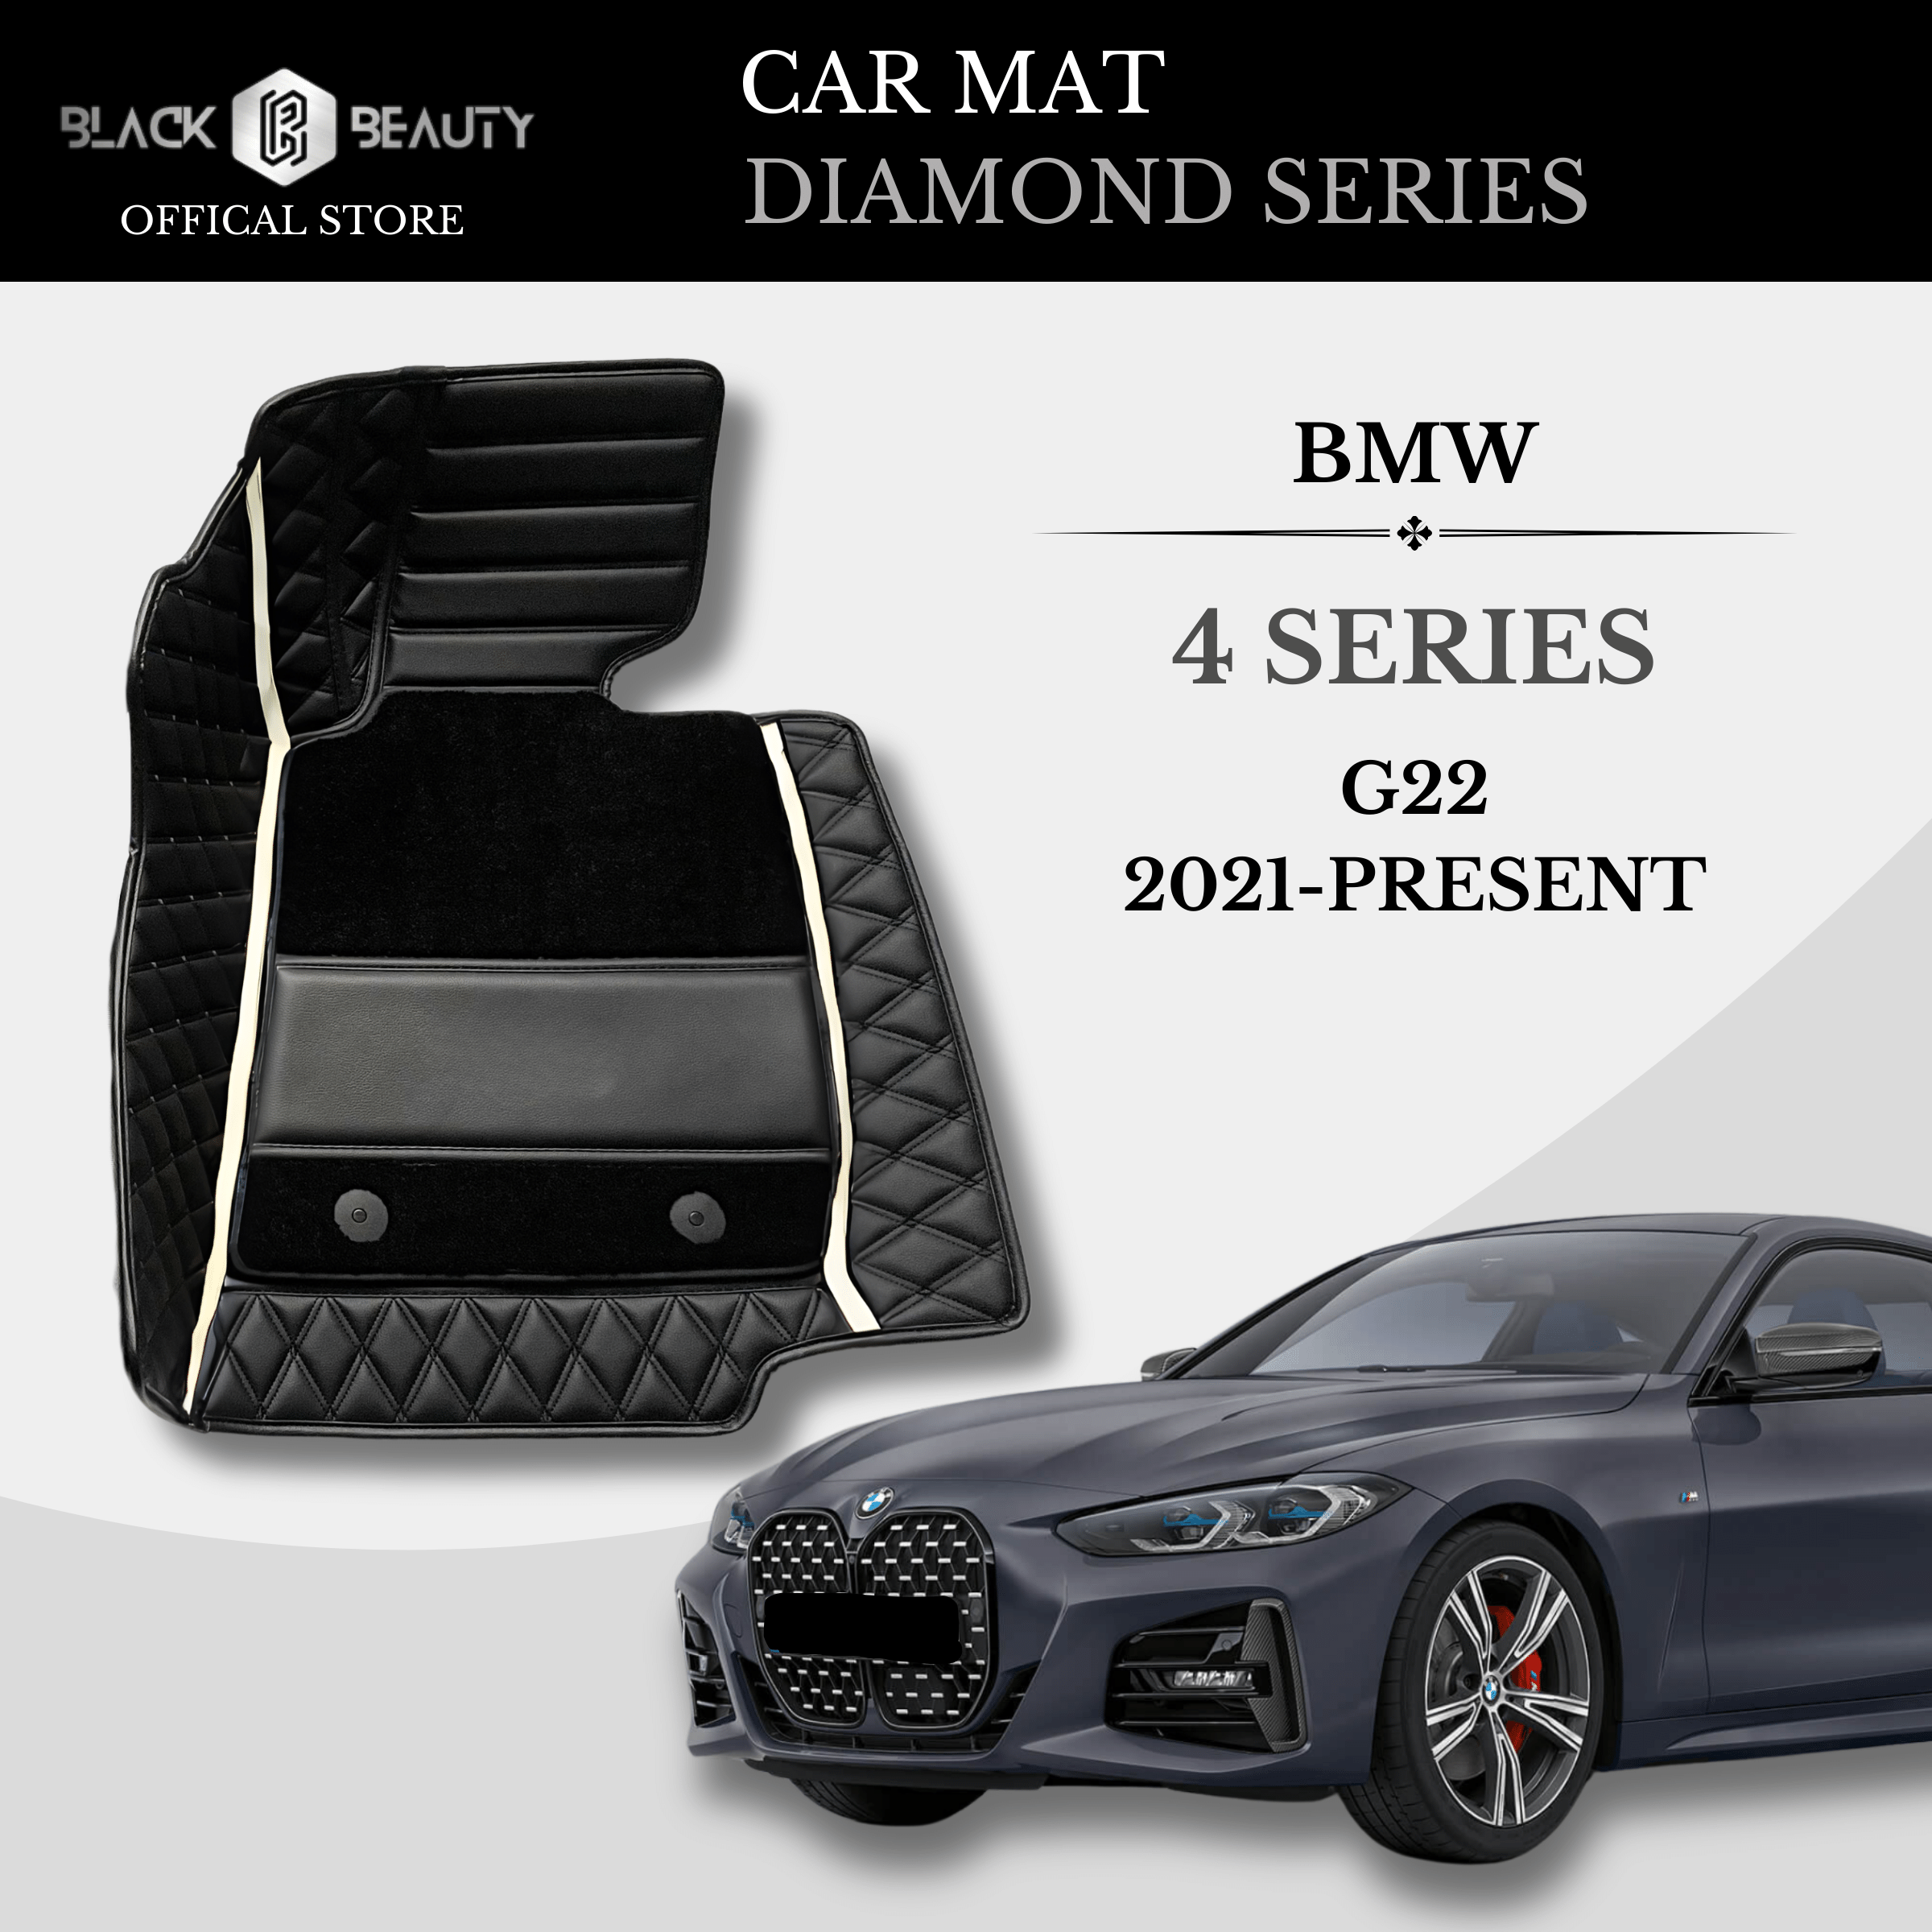 BMW 4 Series G22 (2021-Present) - Diamond Series Car Mat